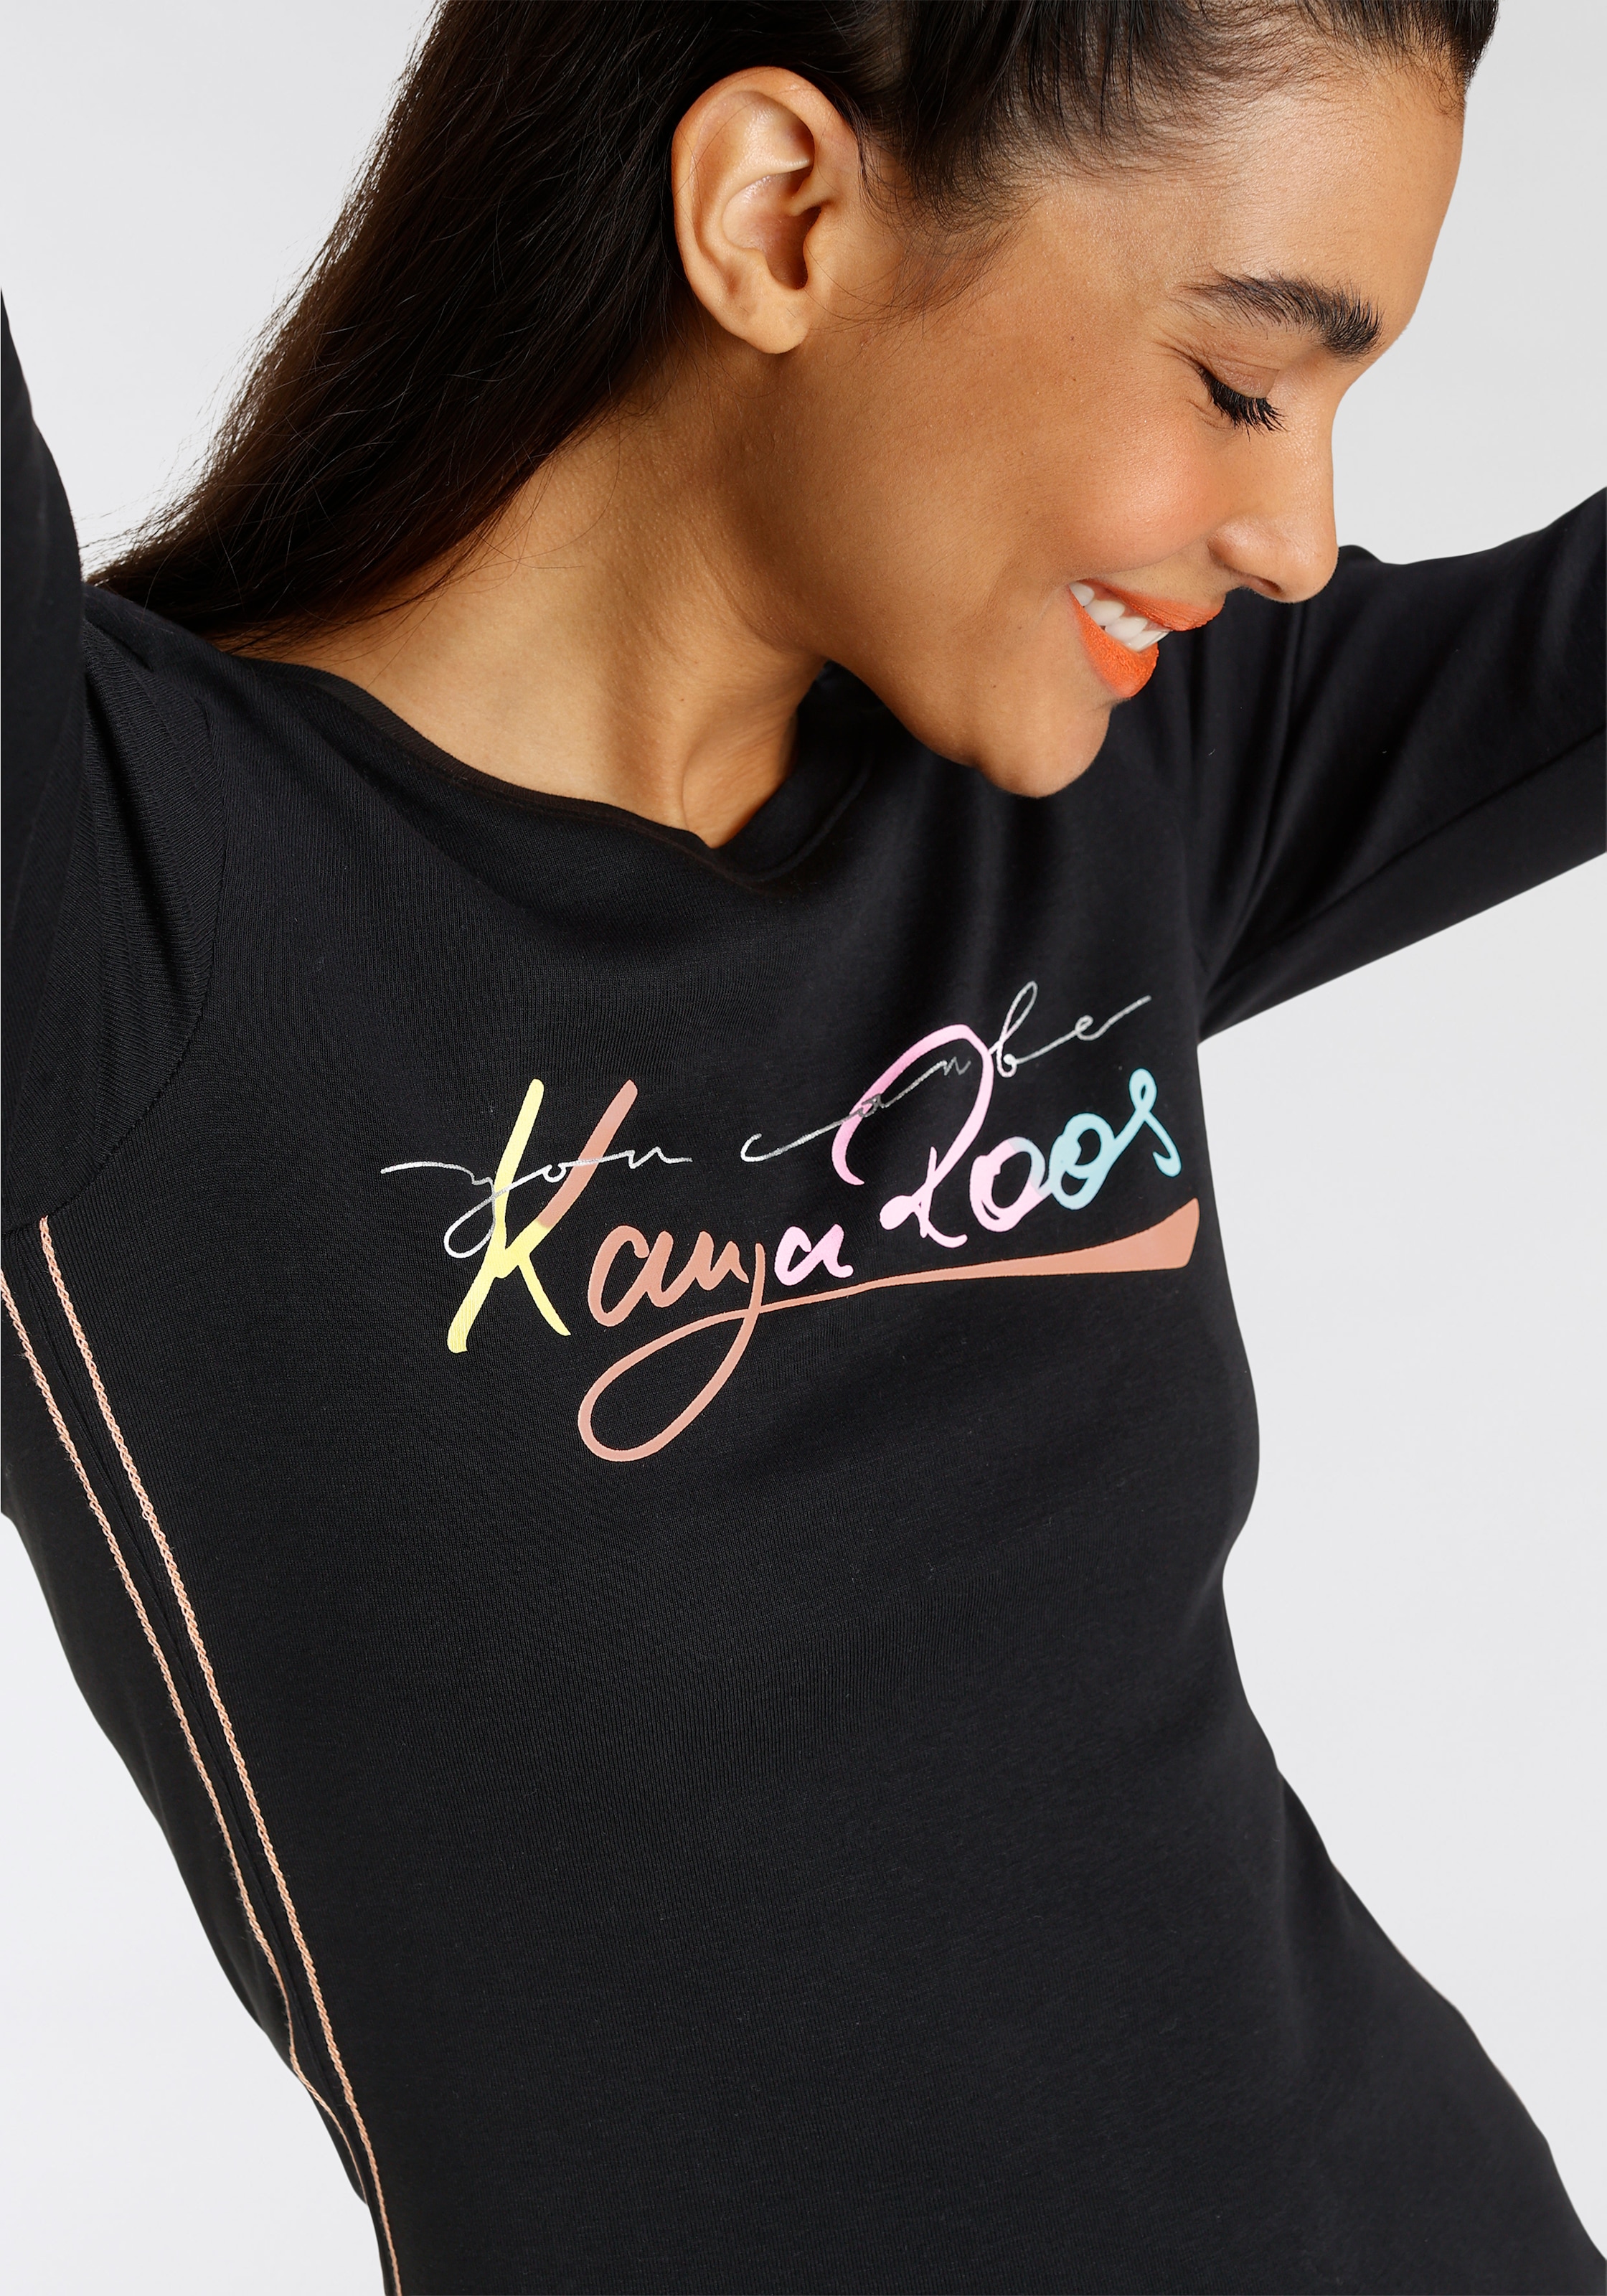 KangaROOS Langarmshirt, mit farbigen NEUE trendig KOLLEKTION - Online-Shop bestellen im Logoschriftzug